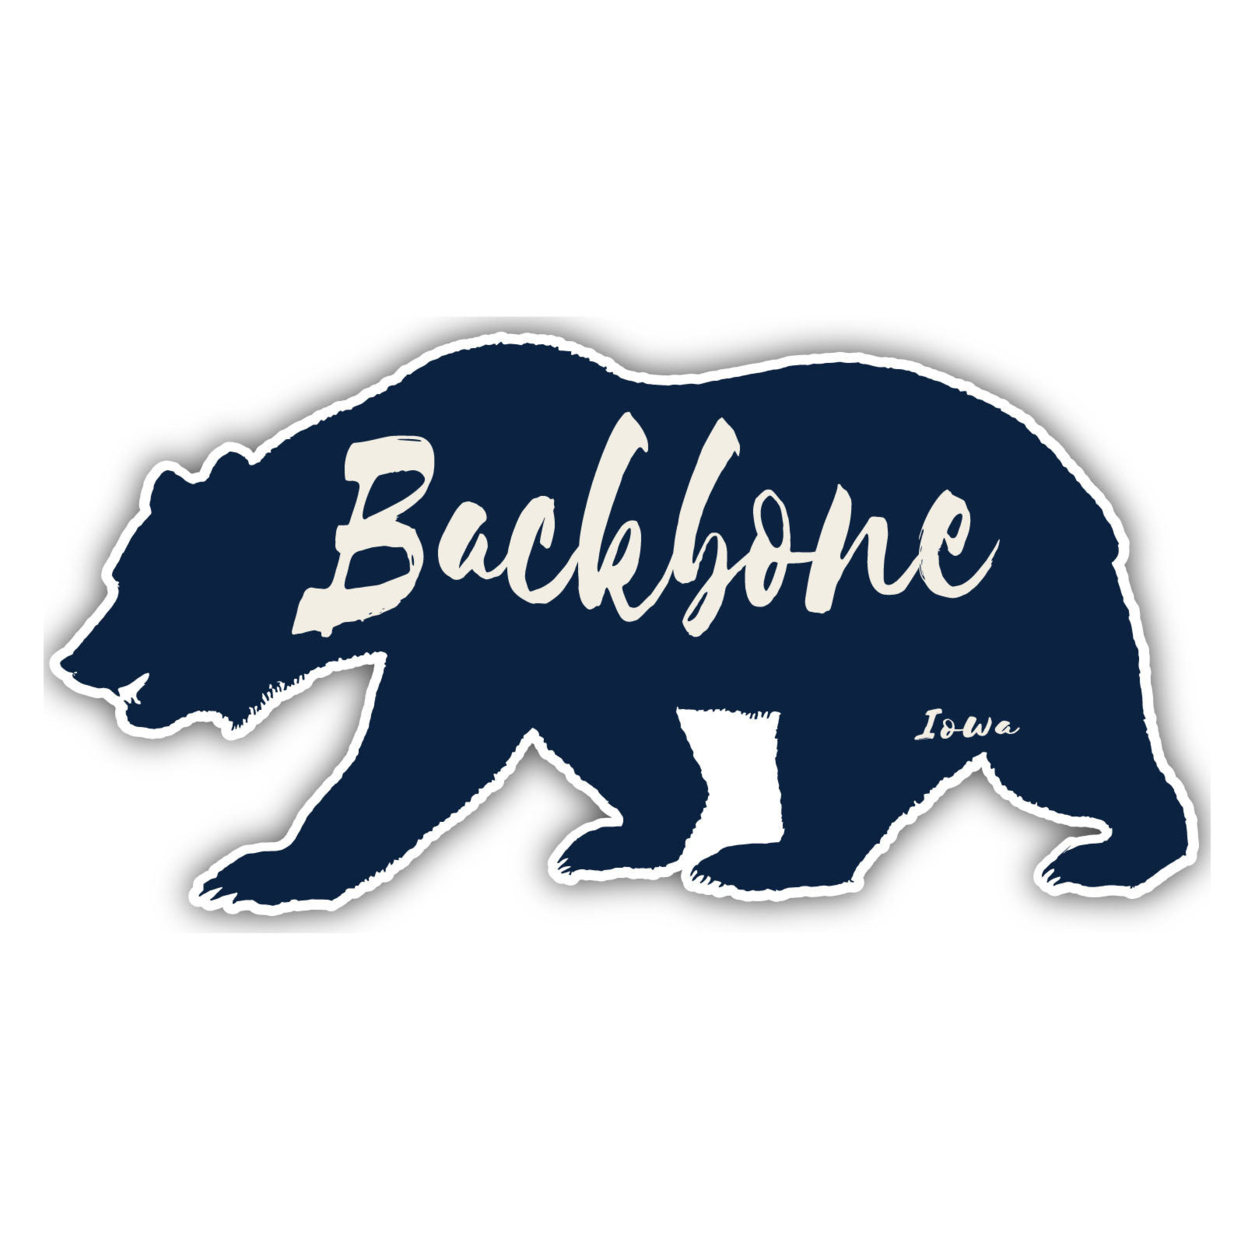 Backbone Iowa Souvenir Decorative Stickers (Choose Theme And Size) - 4-Pack, 6-Inch, Bear